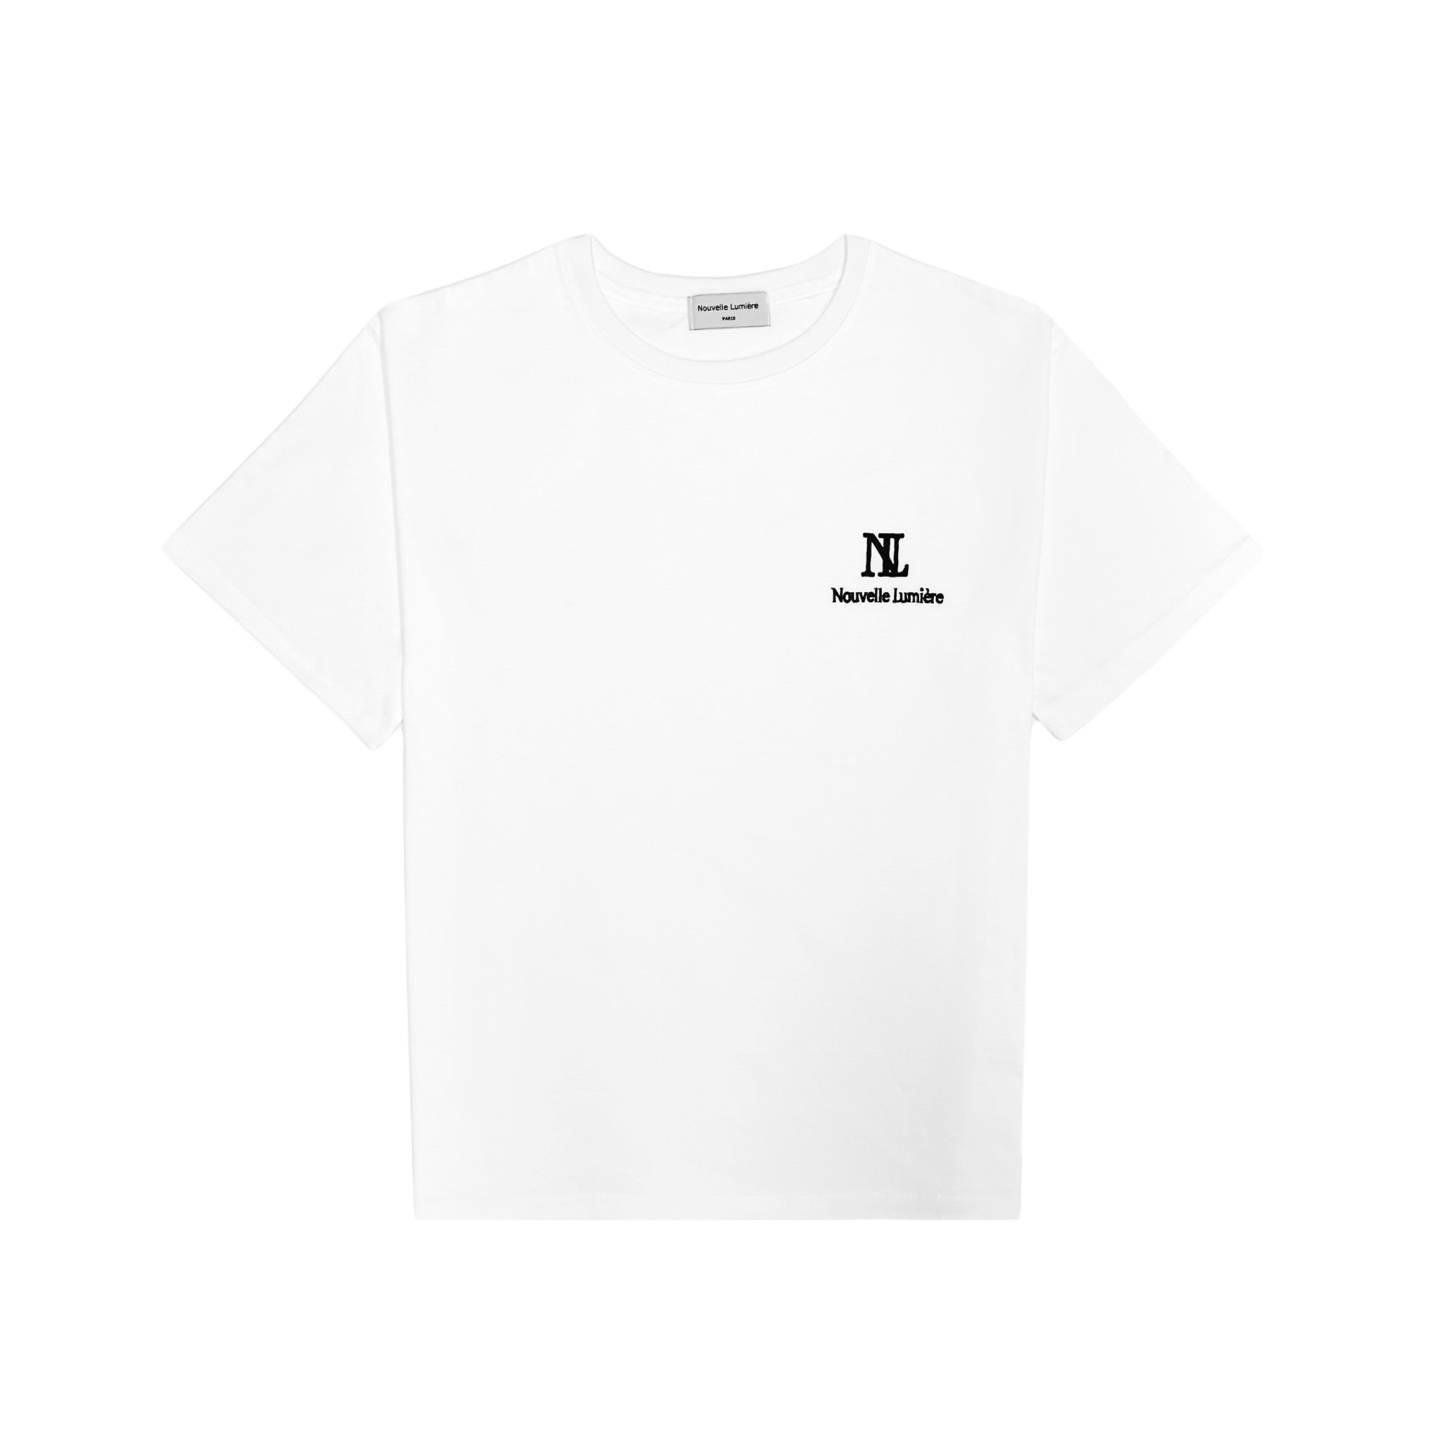 [Nubellemier] 商标 白色 短袖 T恤 (Small ver.)